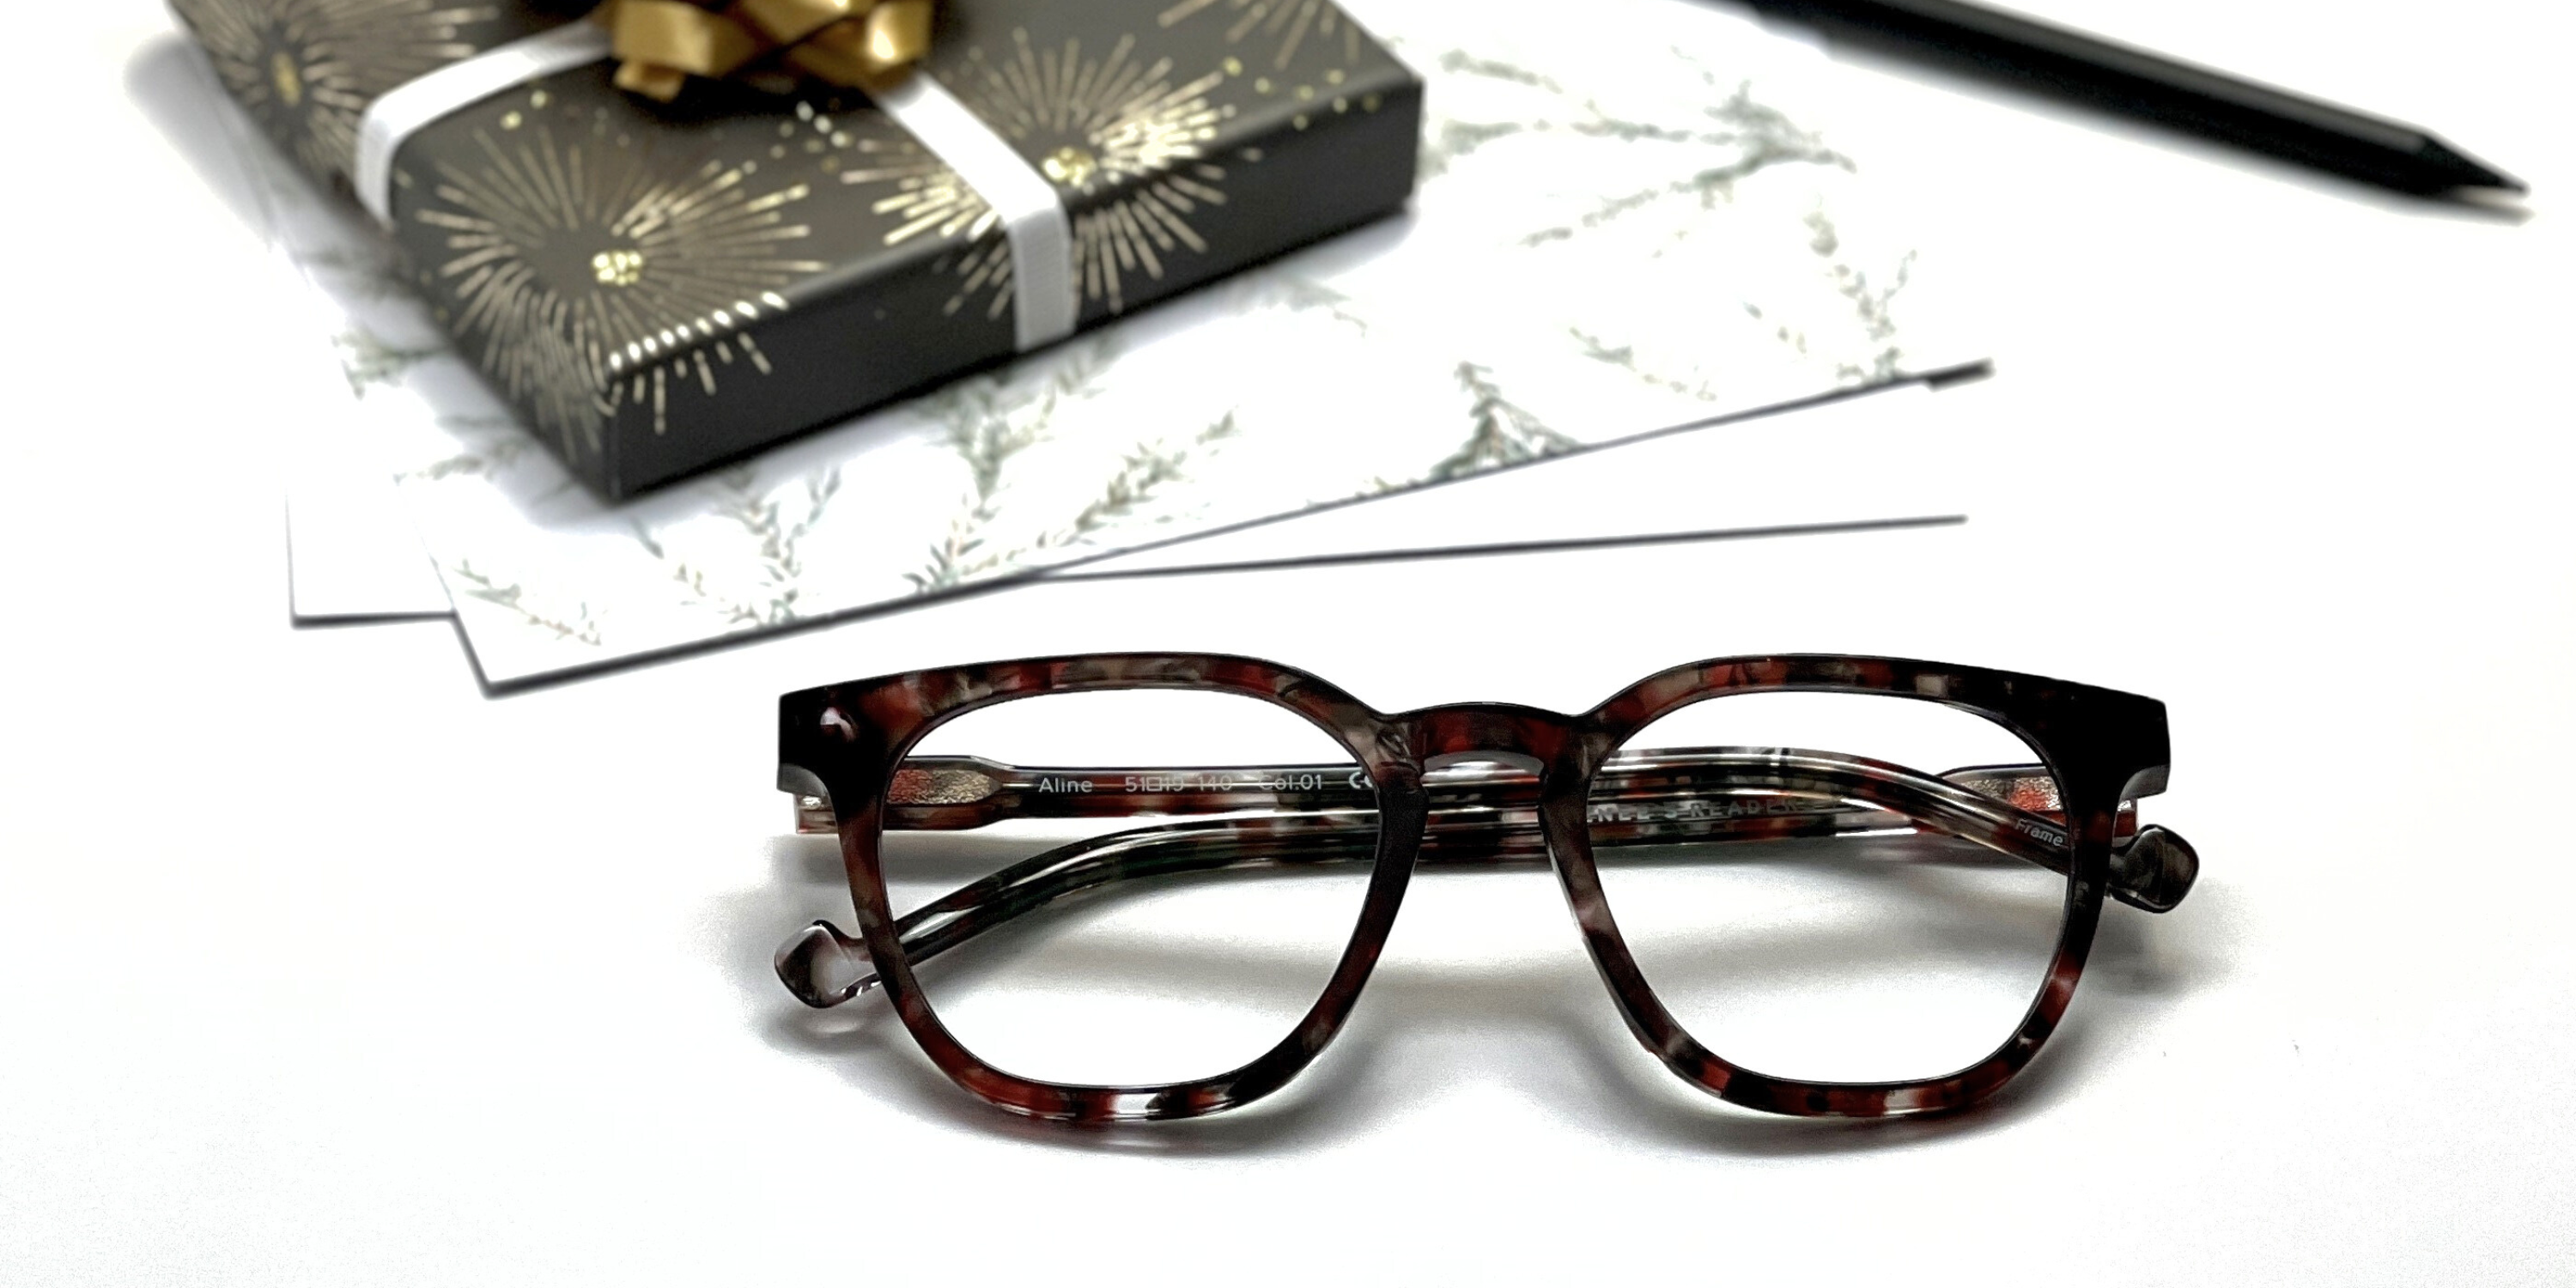 Best Quality Reading Glasses | RENEE'S READERS